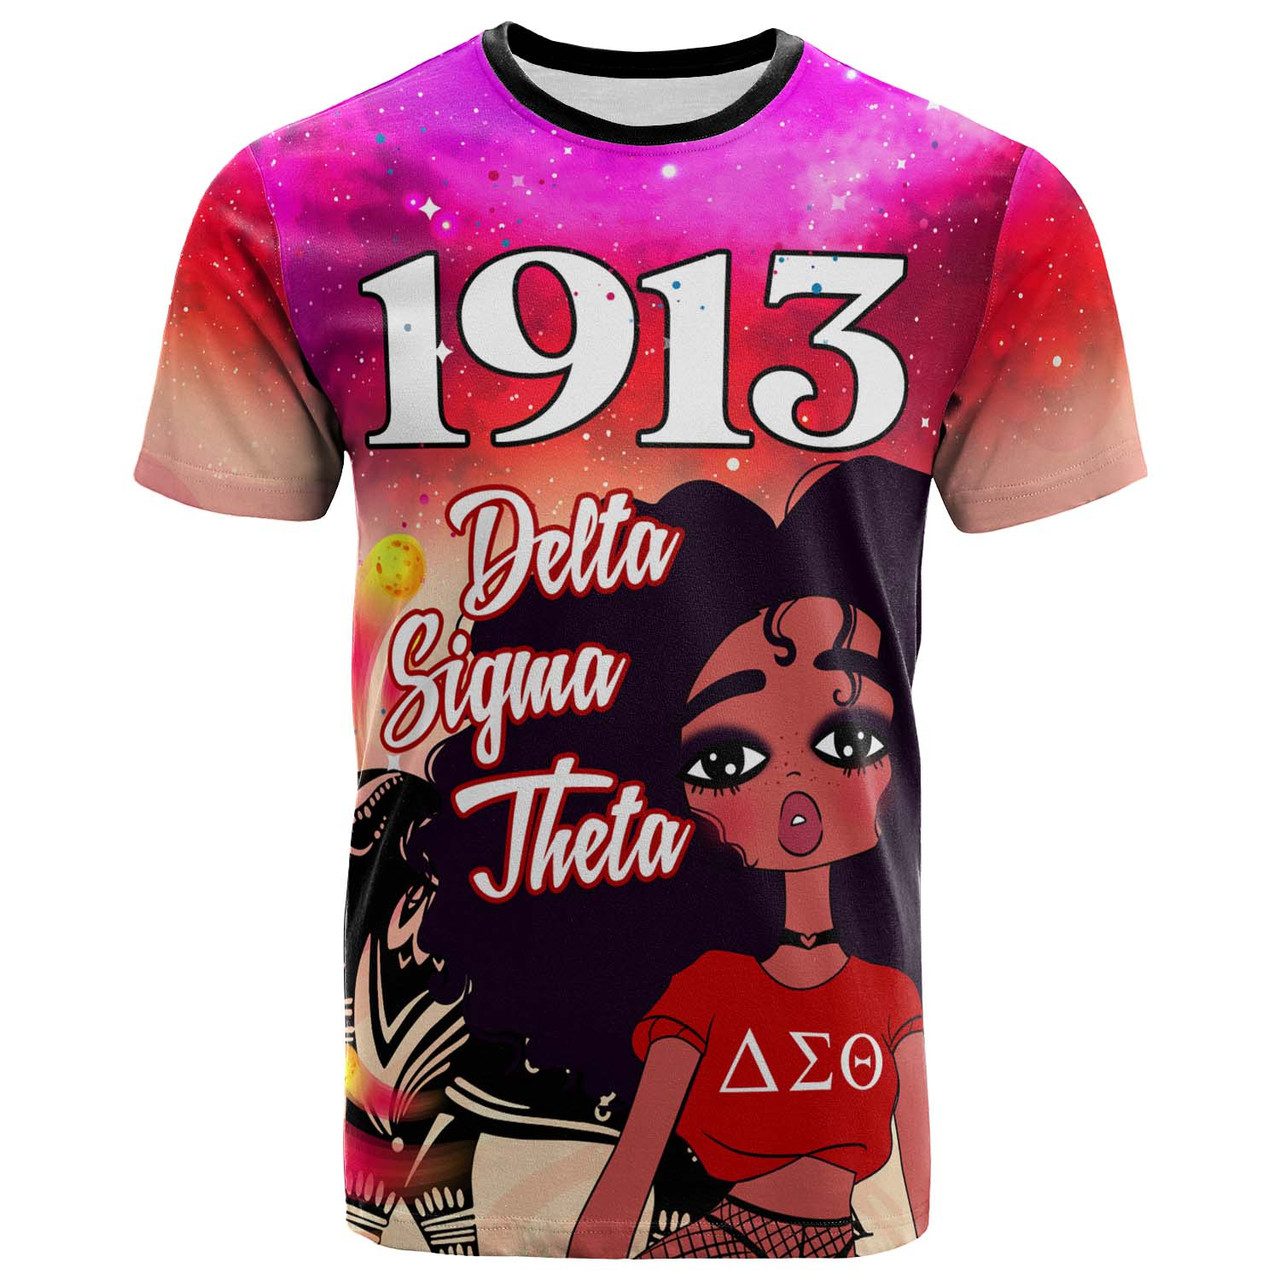 Delta Sigma Theta T-shirt – Custom Sorority Delta Sigma Theta Girl Galaxy Dreaming Style 1913 T-shirt